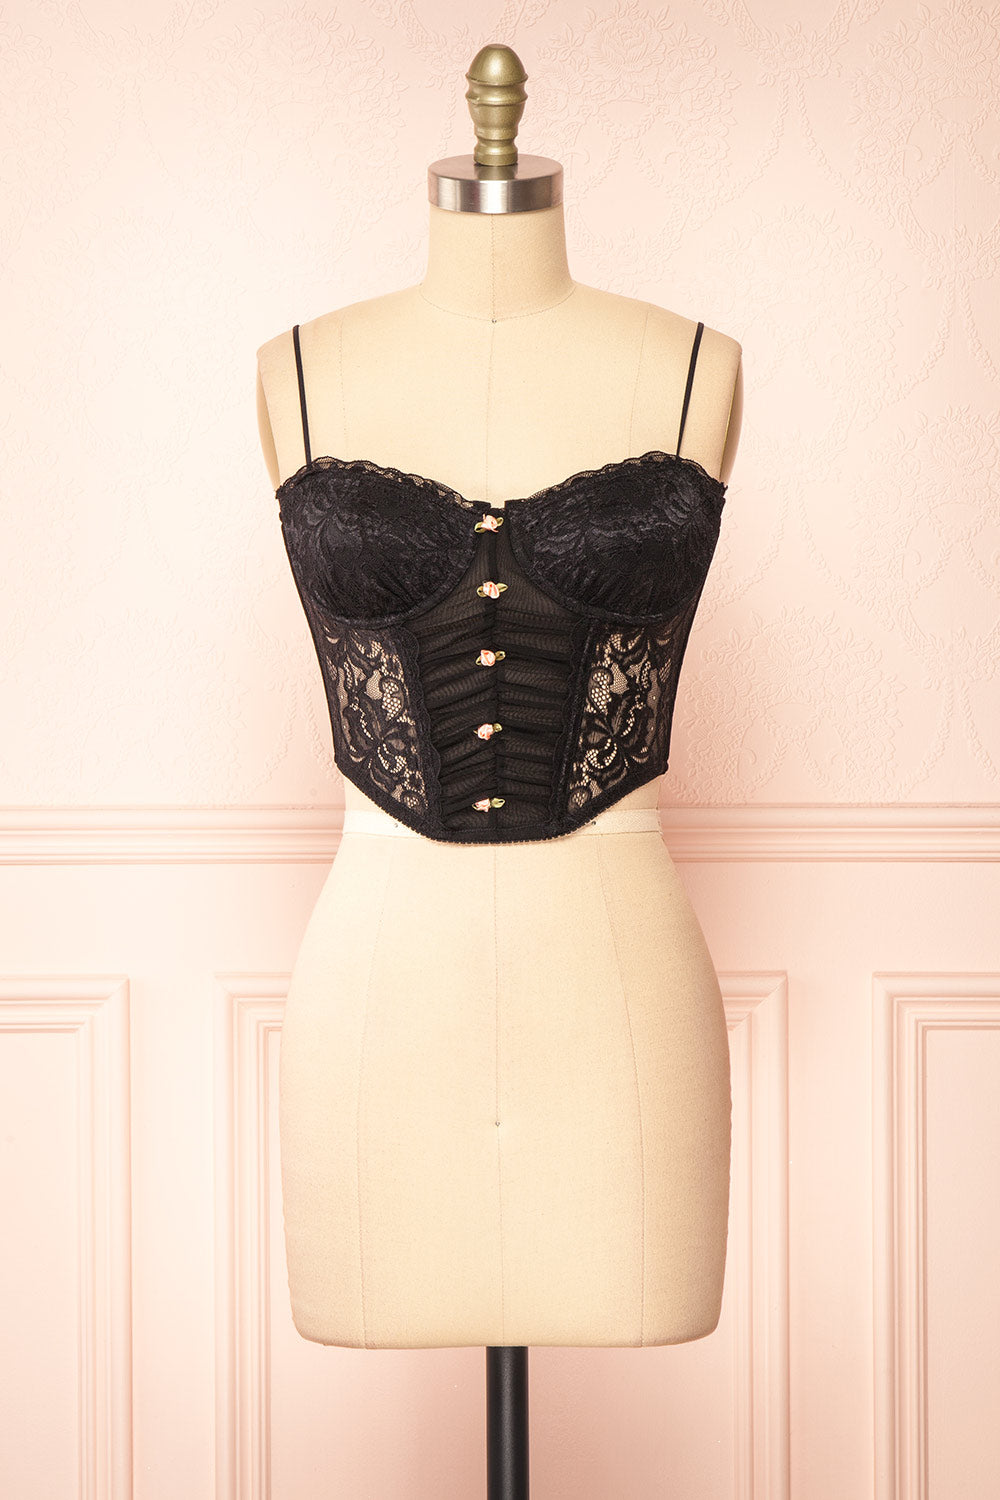 Lucie Cropped Black Lace Corset w/ Roses | Boutique 1861 front view